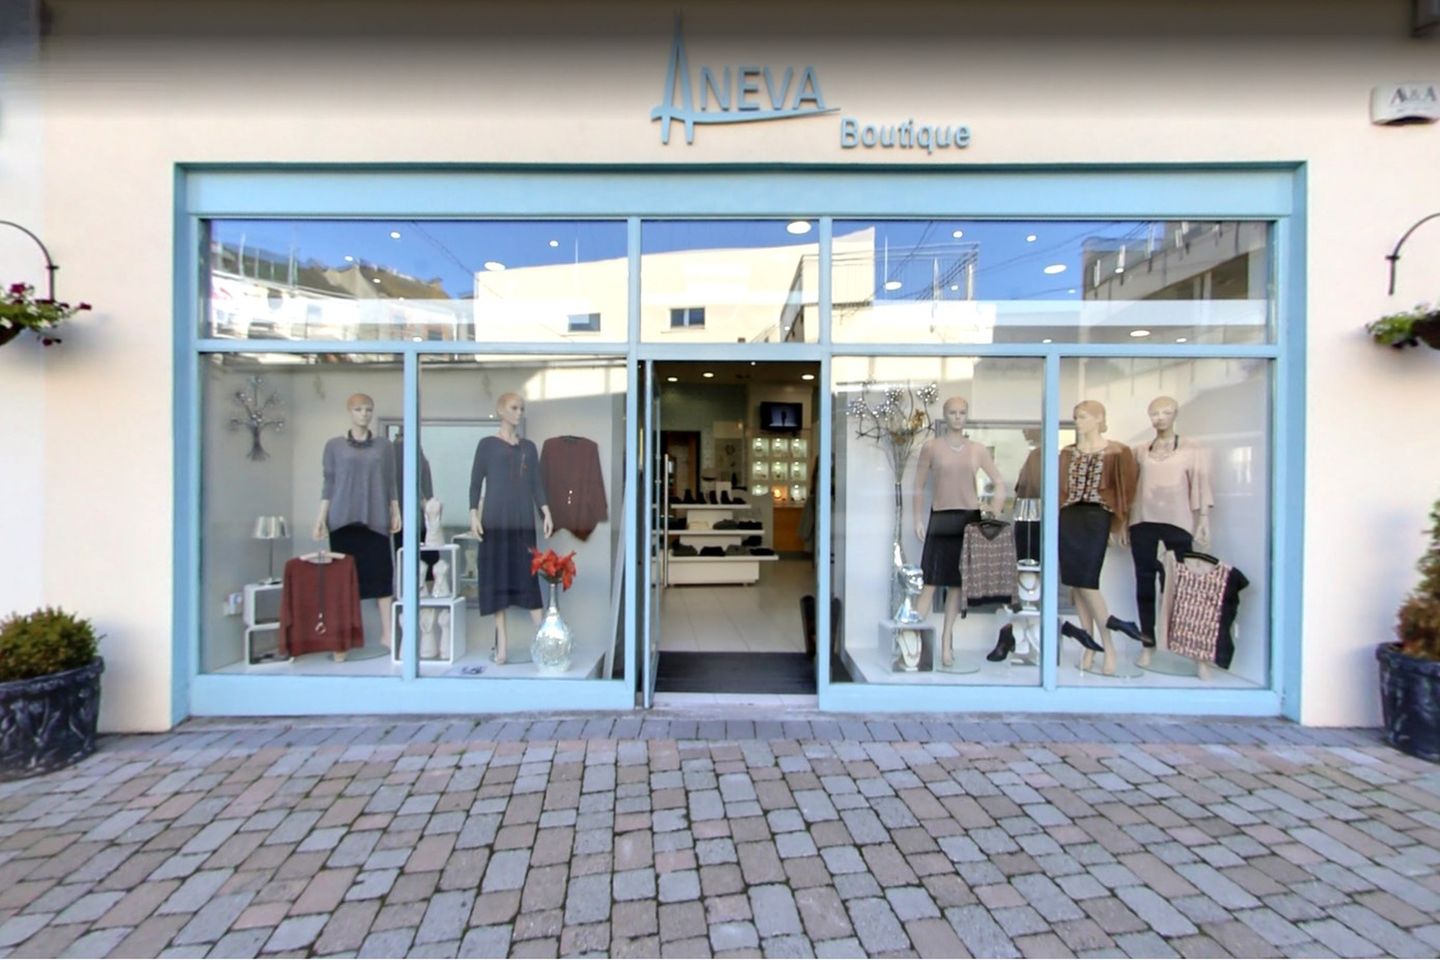 Aneva Boutique, Quintins Way, Nenagh, Co. Tipperary, E45X288